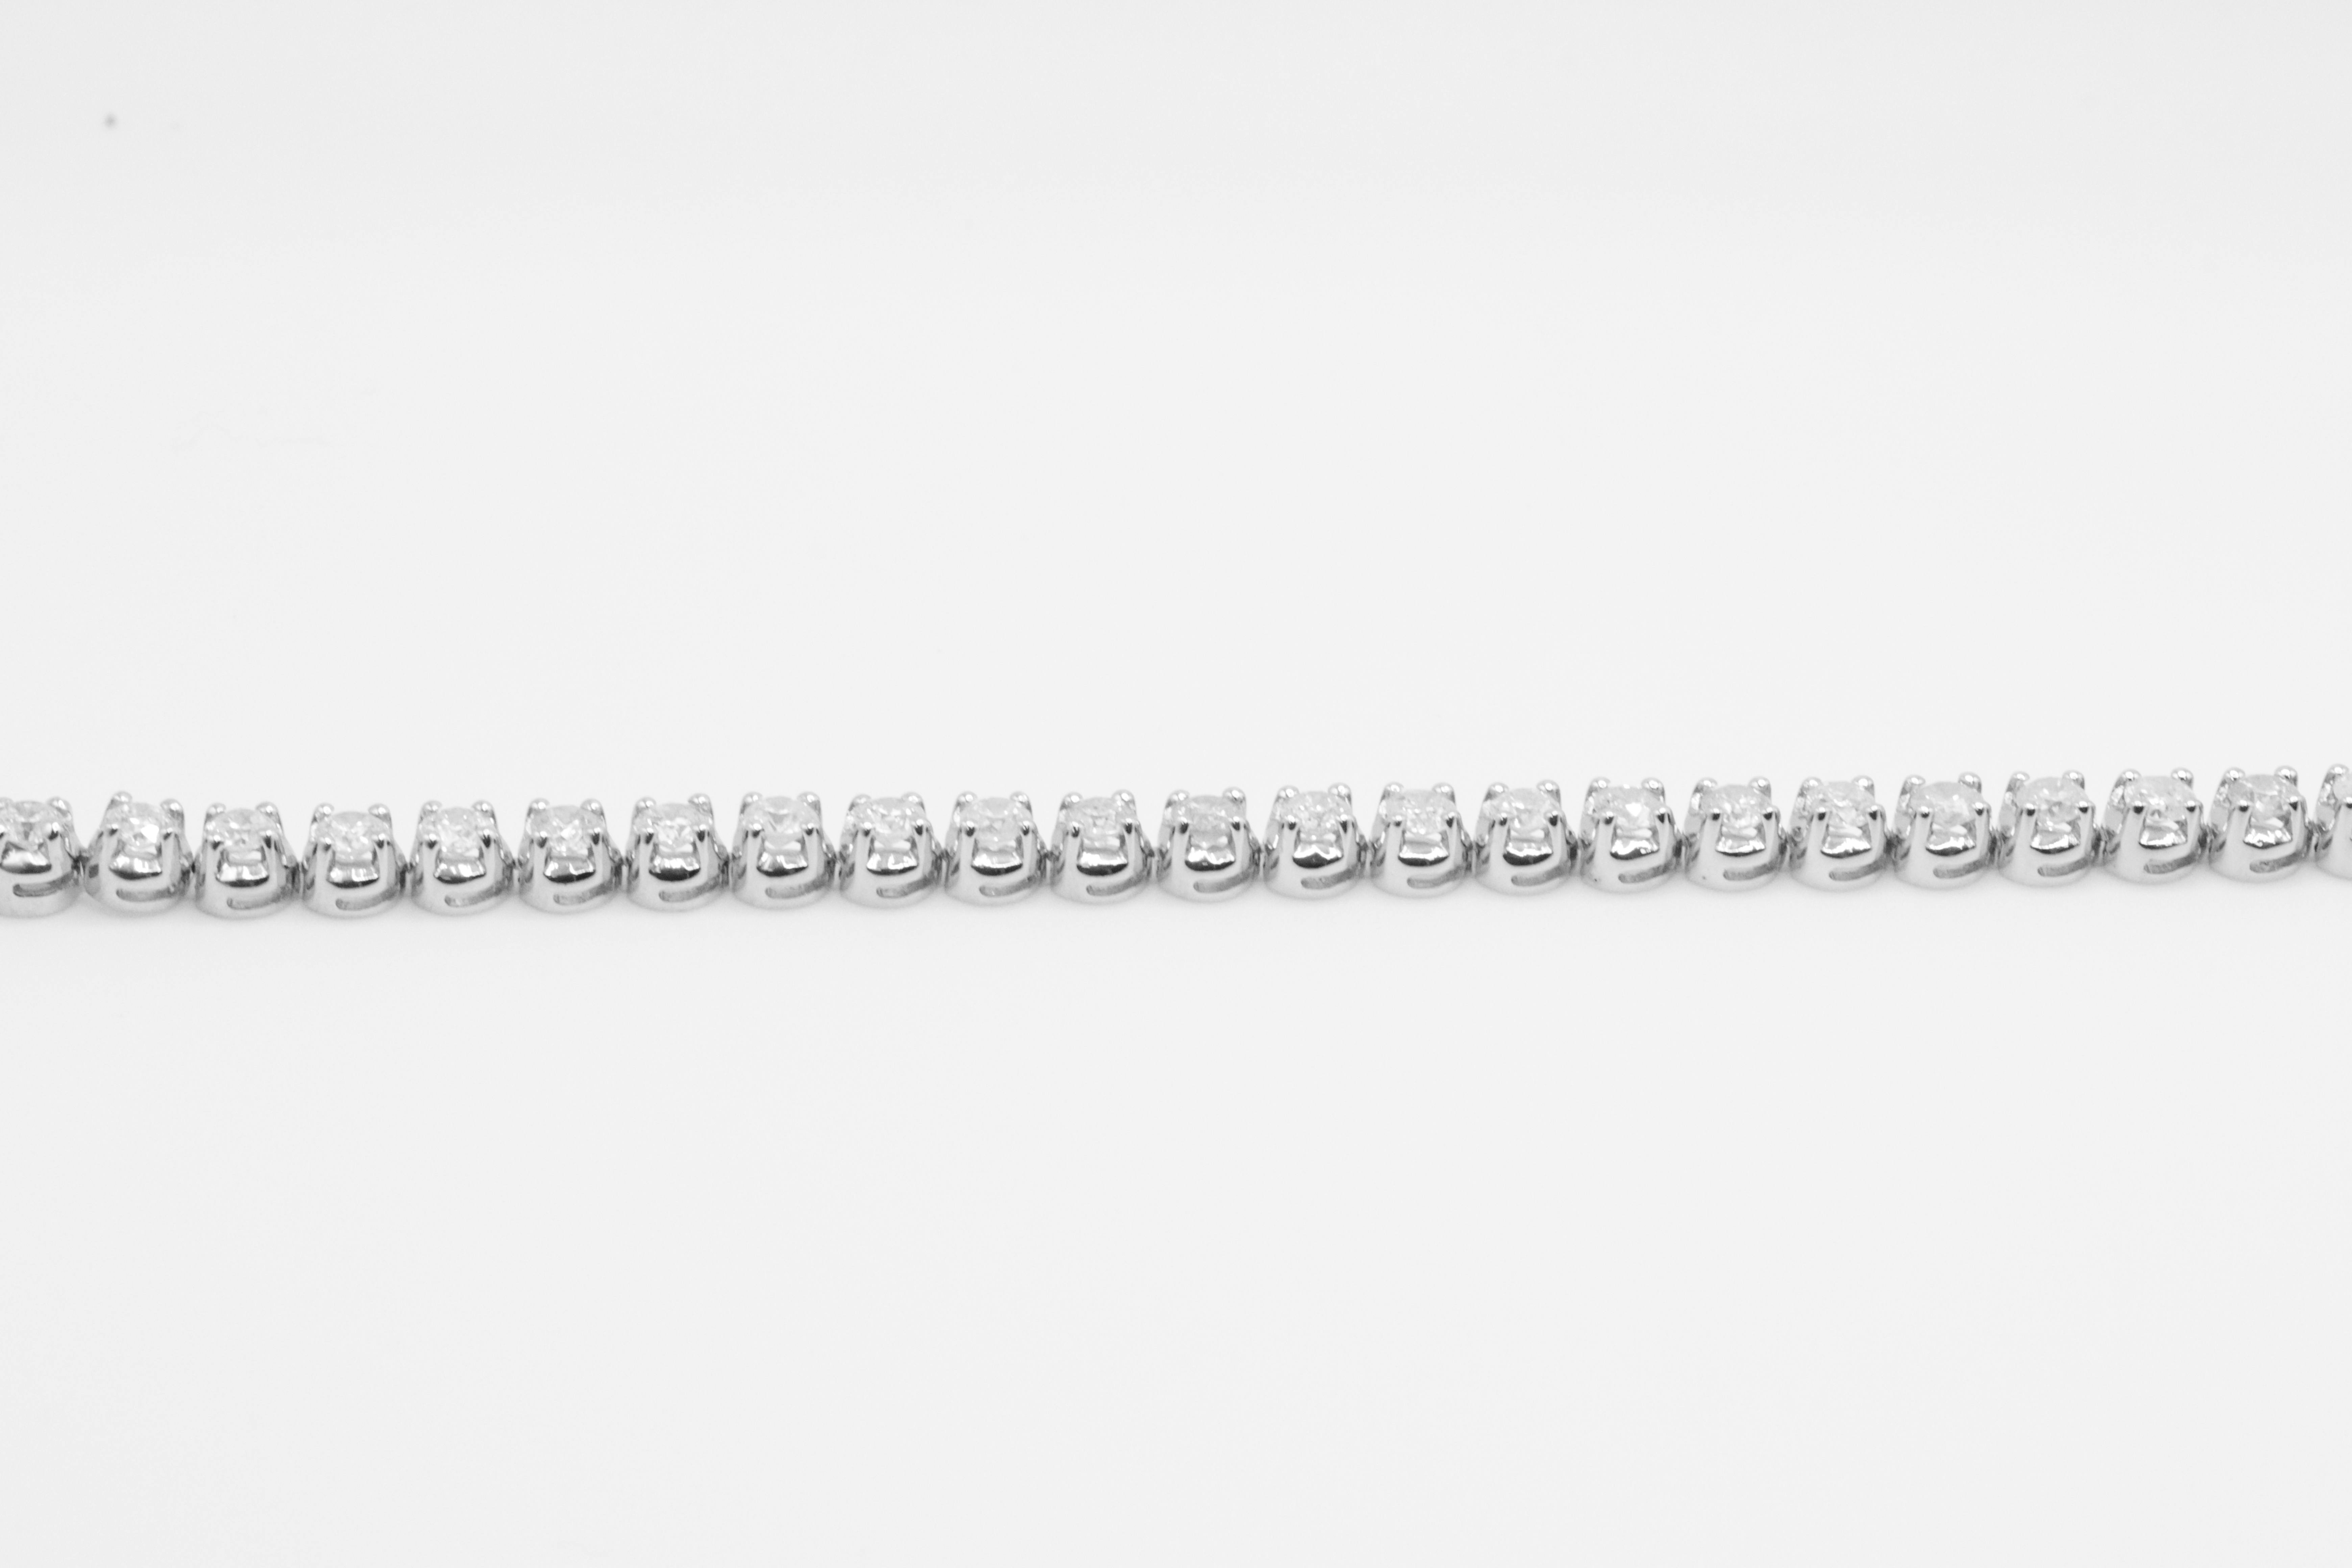 7.0 Carat 18ct White Gold Tennis Bracelet set with Round Brilliant Cut Natural Diamonds - Image 10 of 16